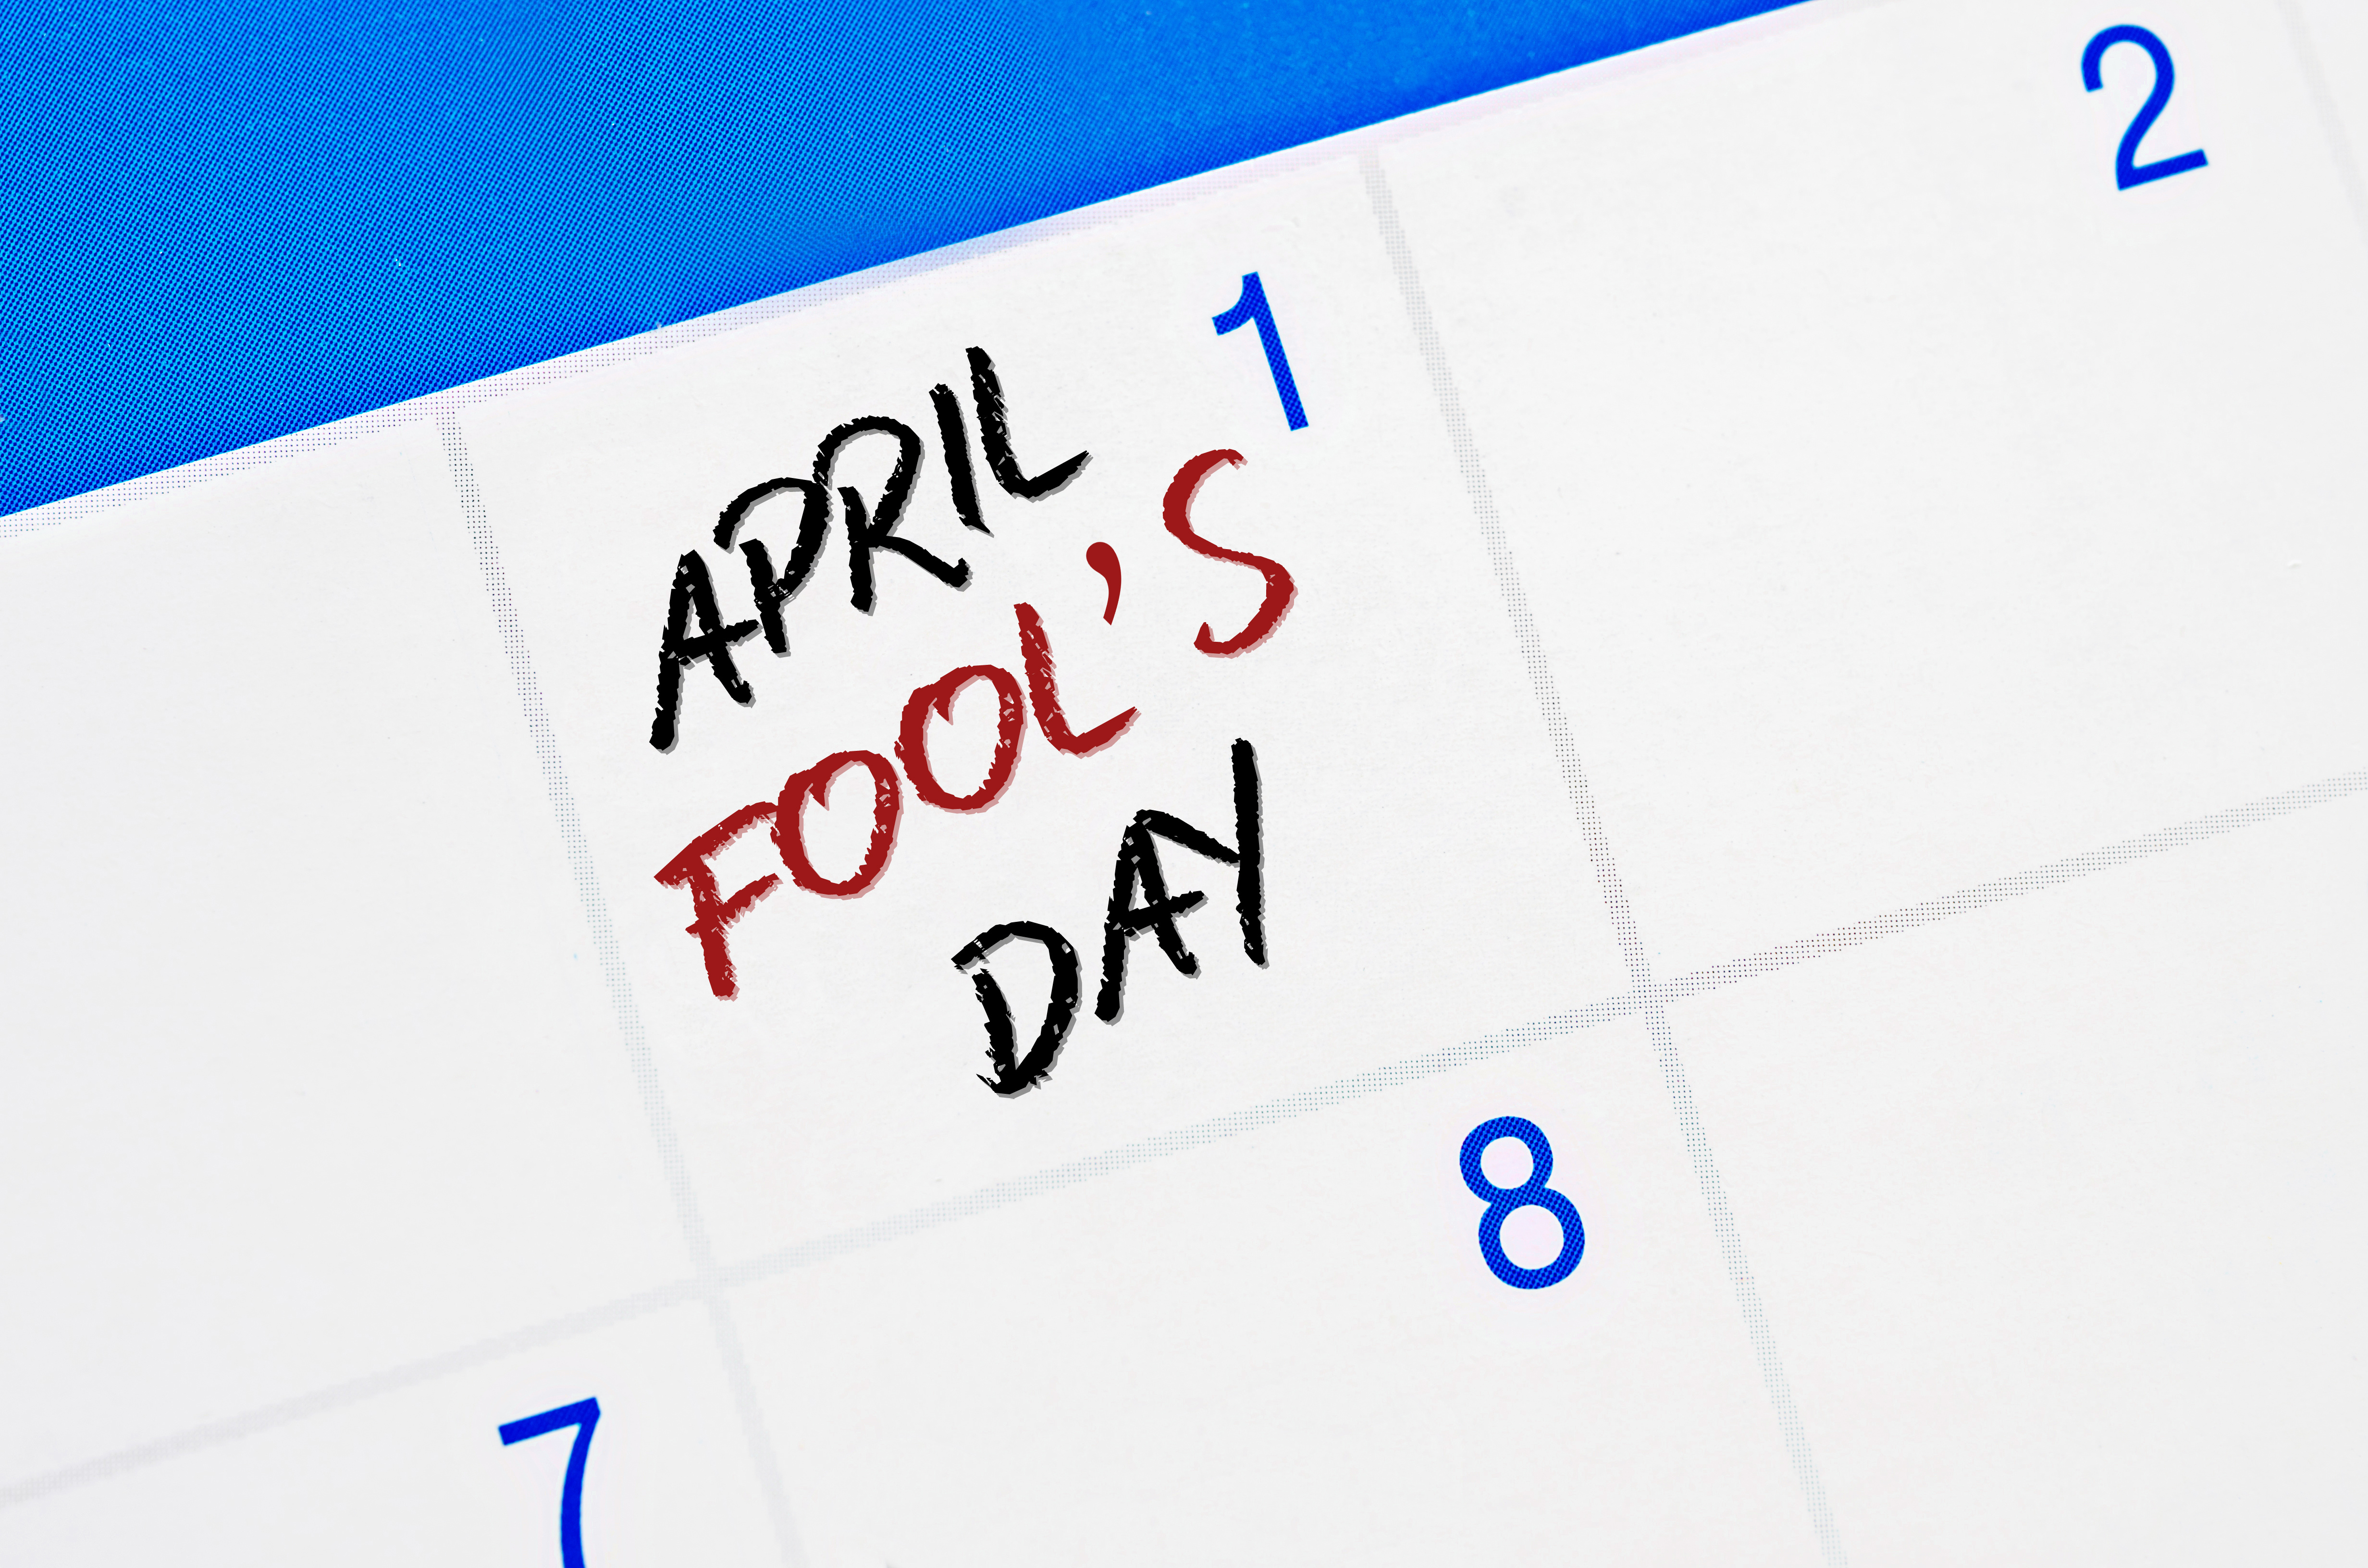 Calendar April Fool's Day